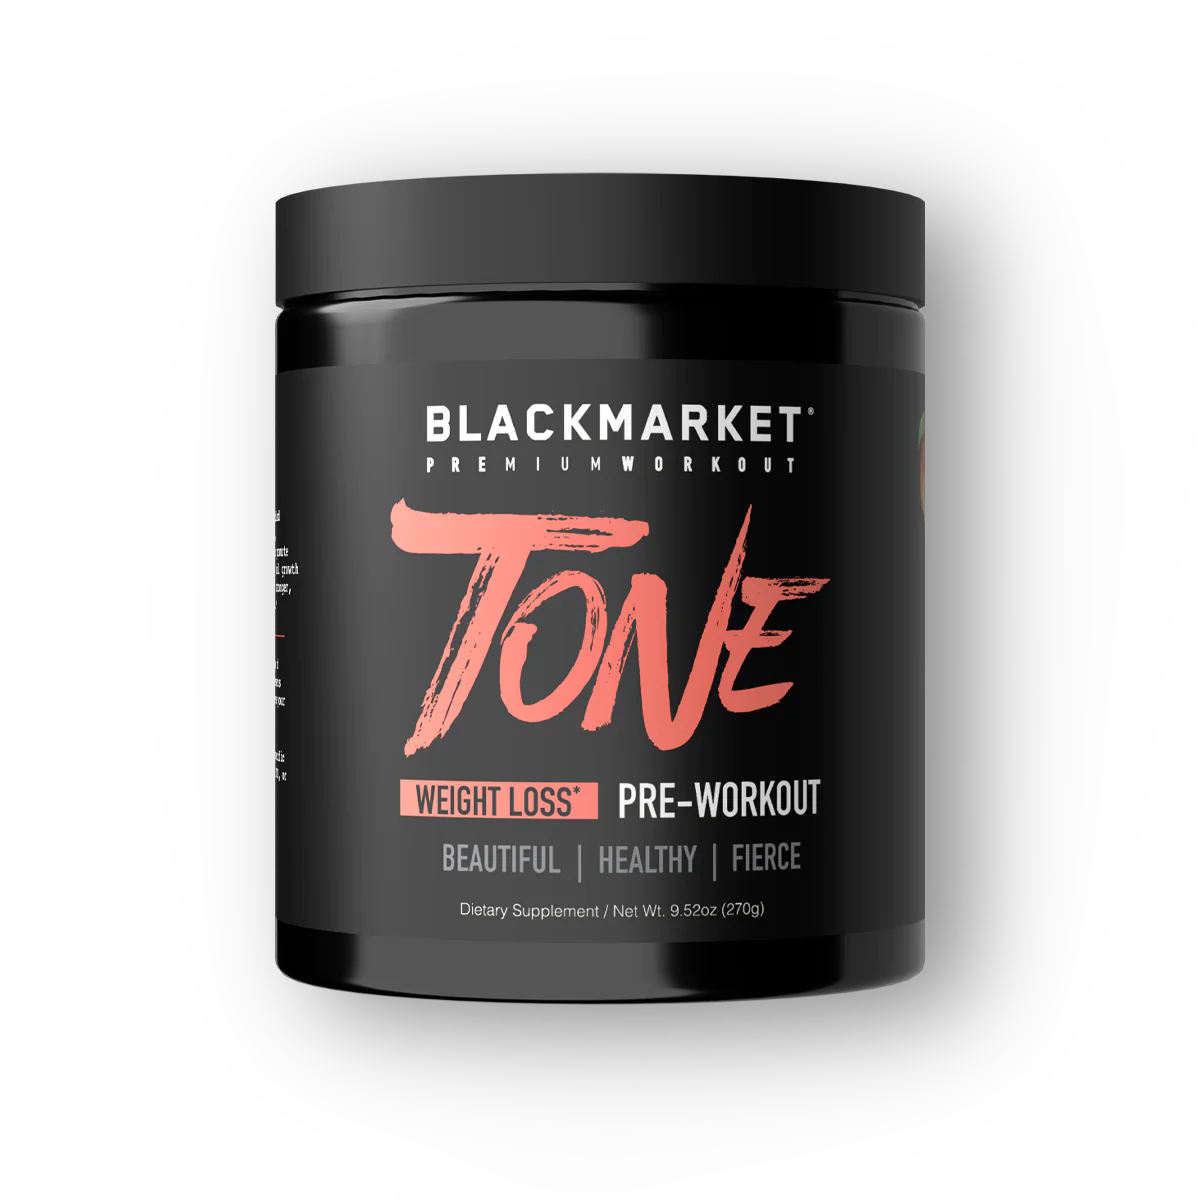 Tone Pre-Workout by Blackmarket Labs